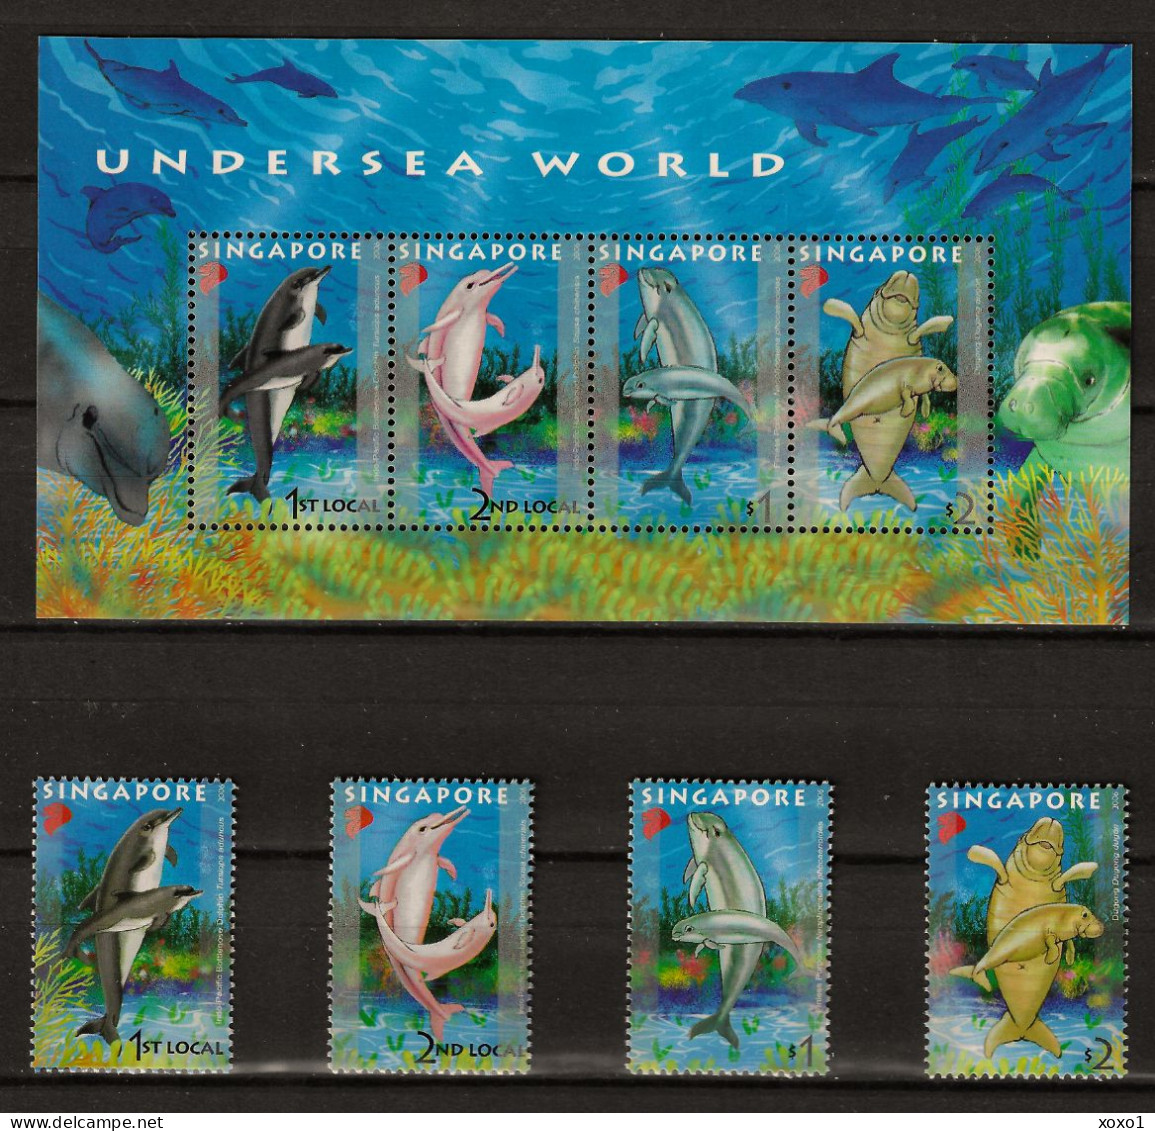 Singapore 2006 MiNr. 1535 - 1538 (Block 121) Singapur Marine Mammals Dolphins, Dugong  4v + S\sh  MNH** 11.80 € - Delfines